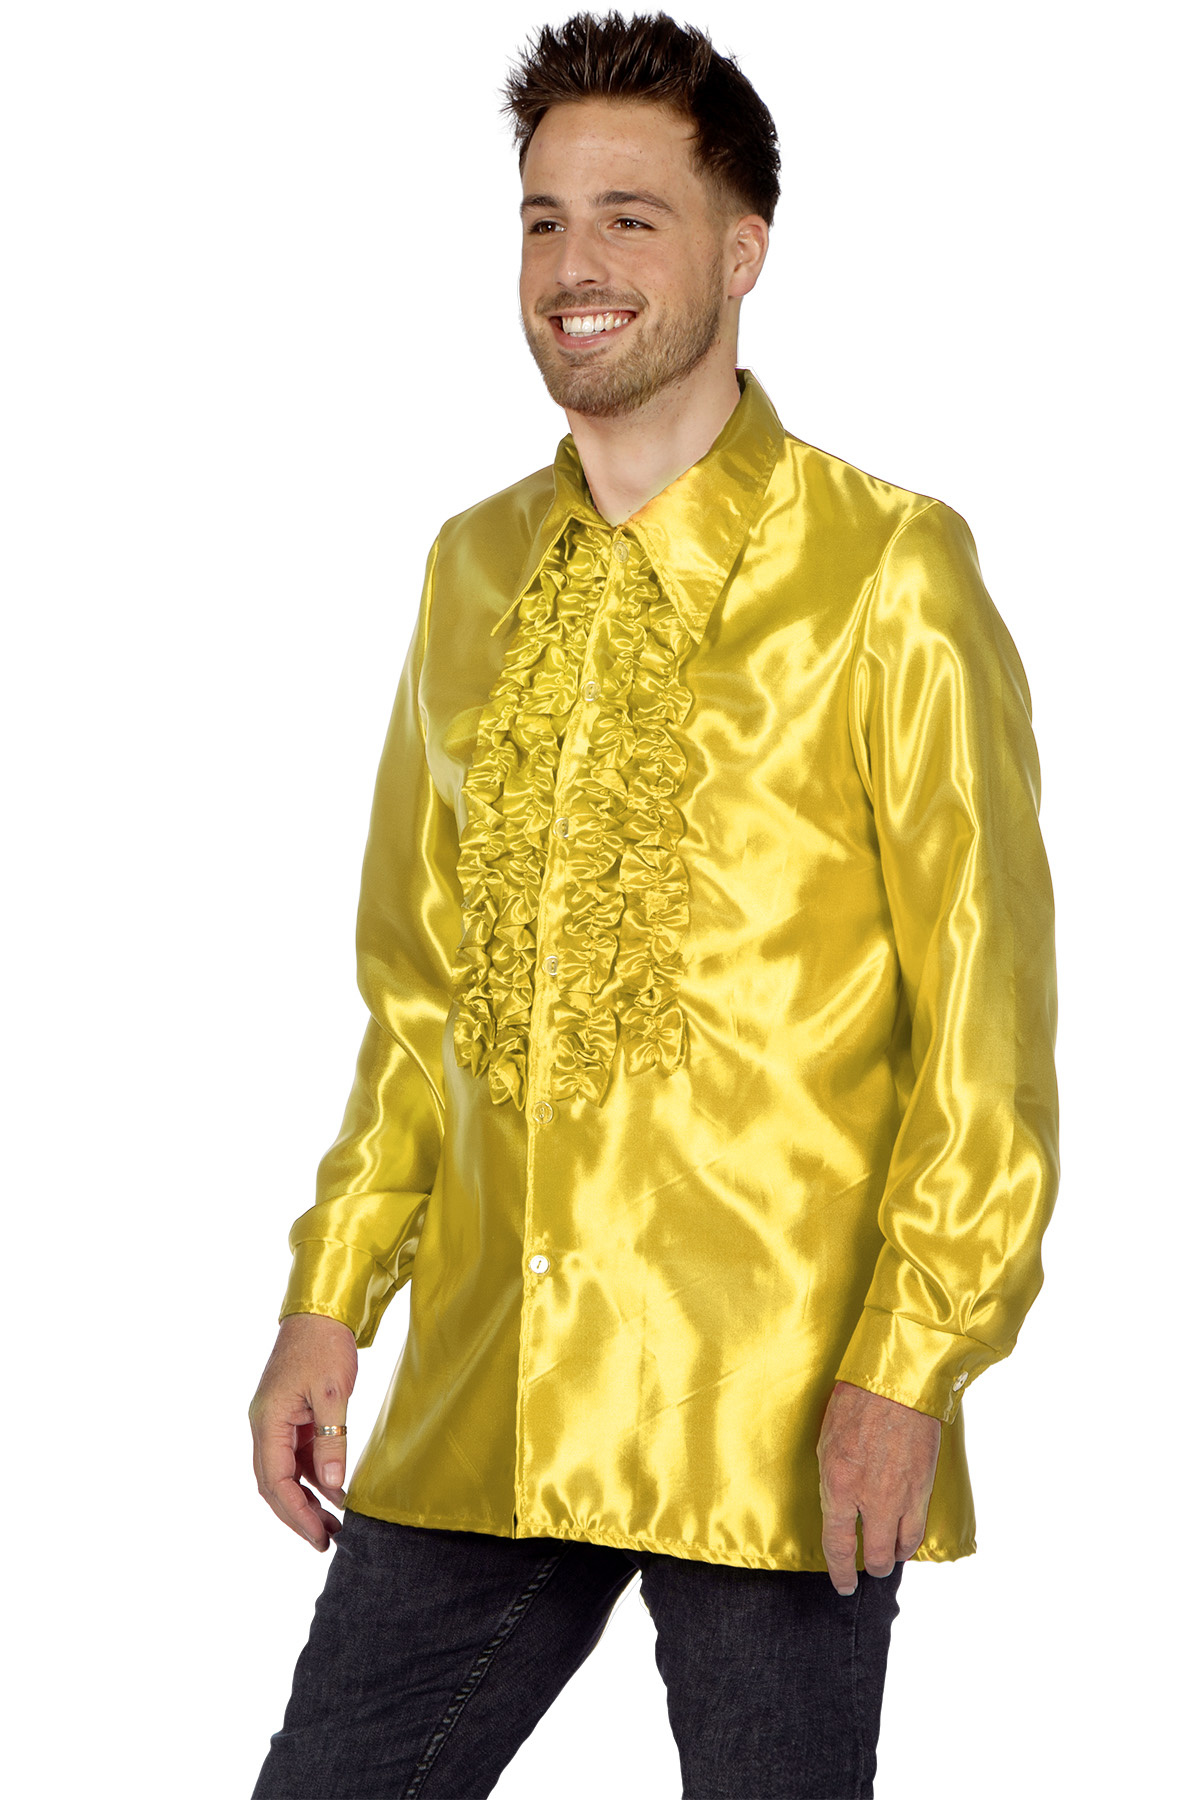 Wilbers - Jaren 80 & 90 Kostuum - Knallend Gele Foute Ruchesblouse Satijn Disco Party Man - geel - Maat 64 - Carnavalskleding - Verkleedkleding